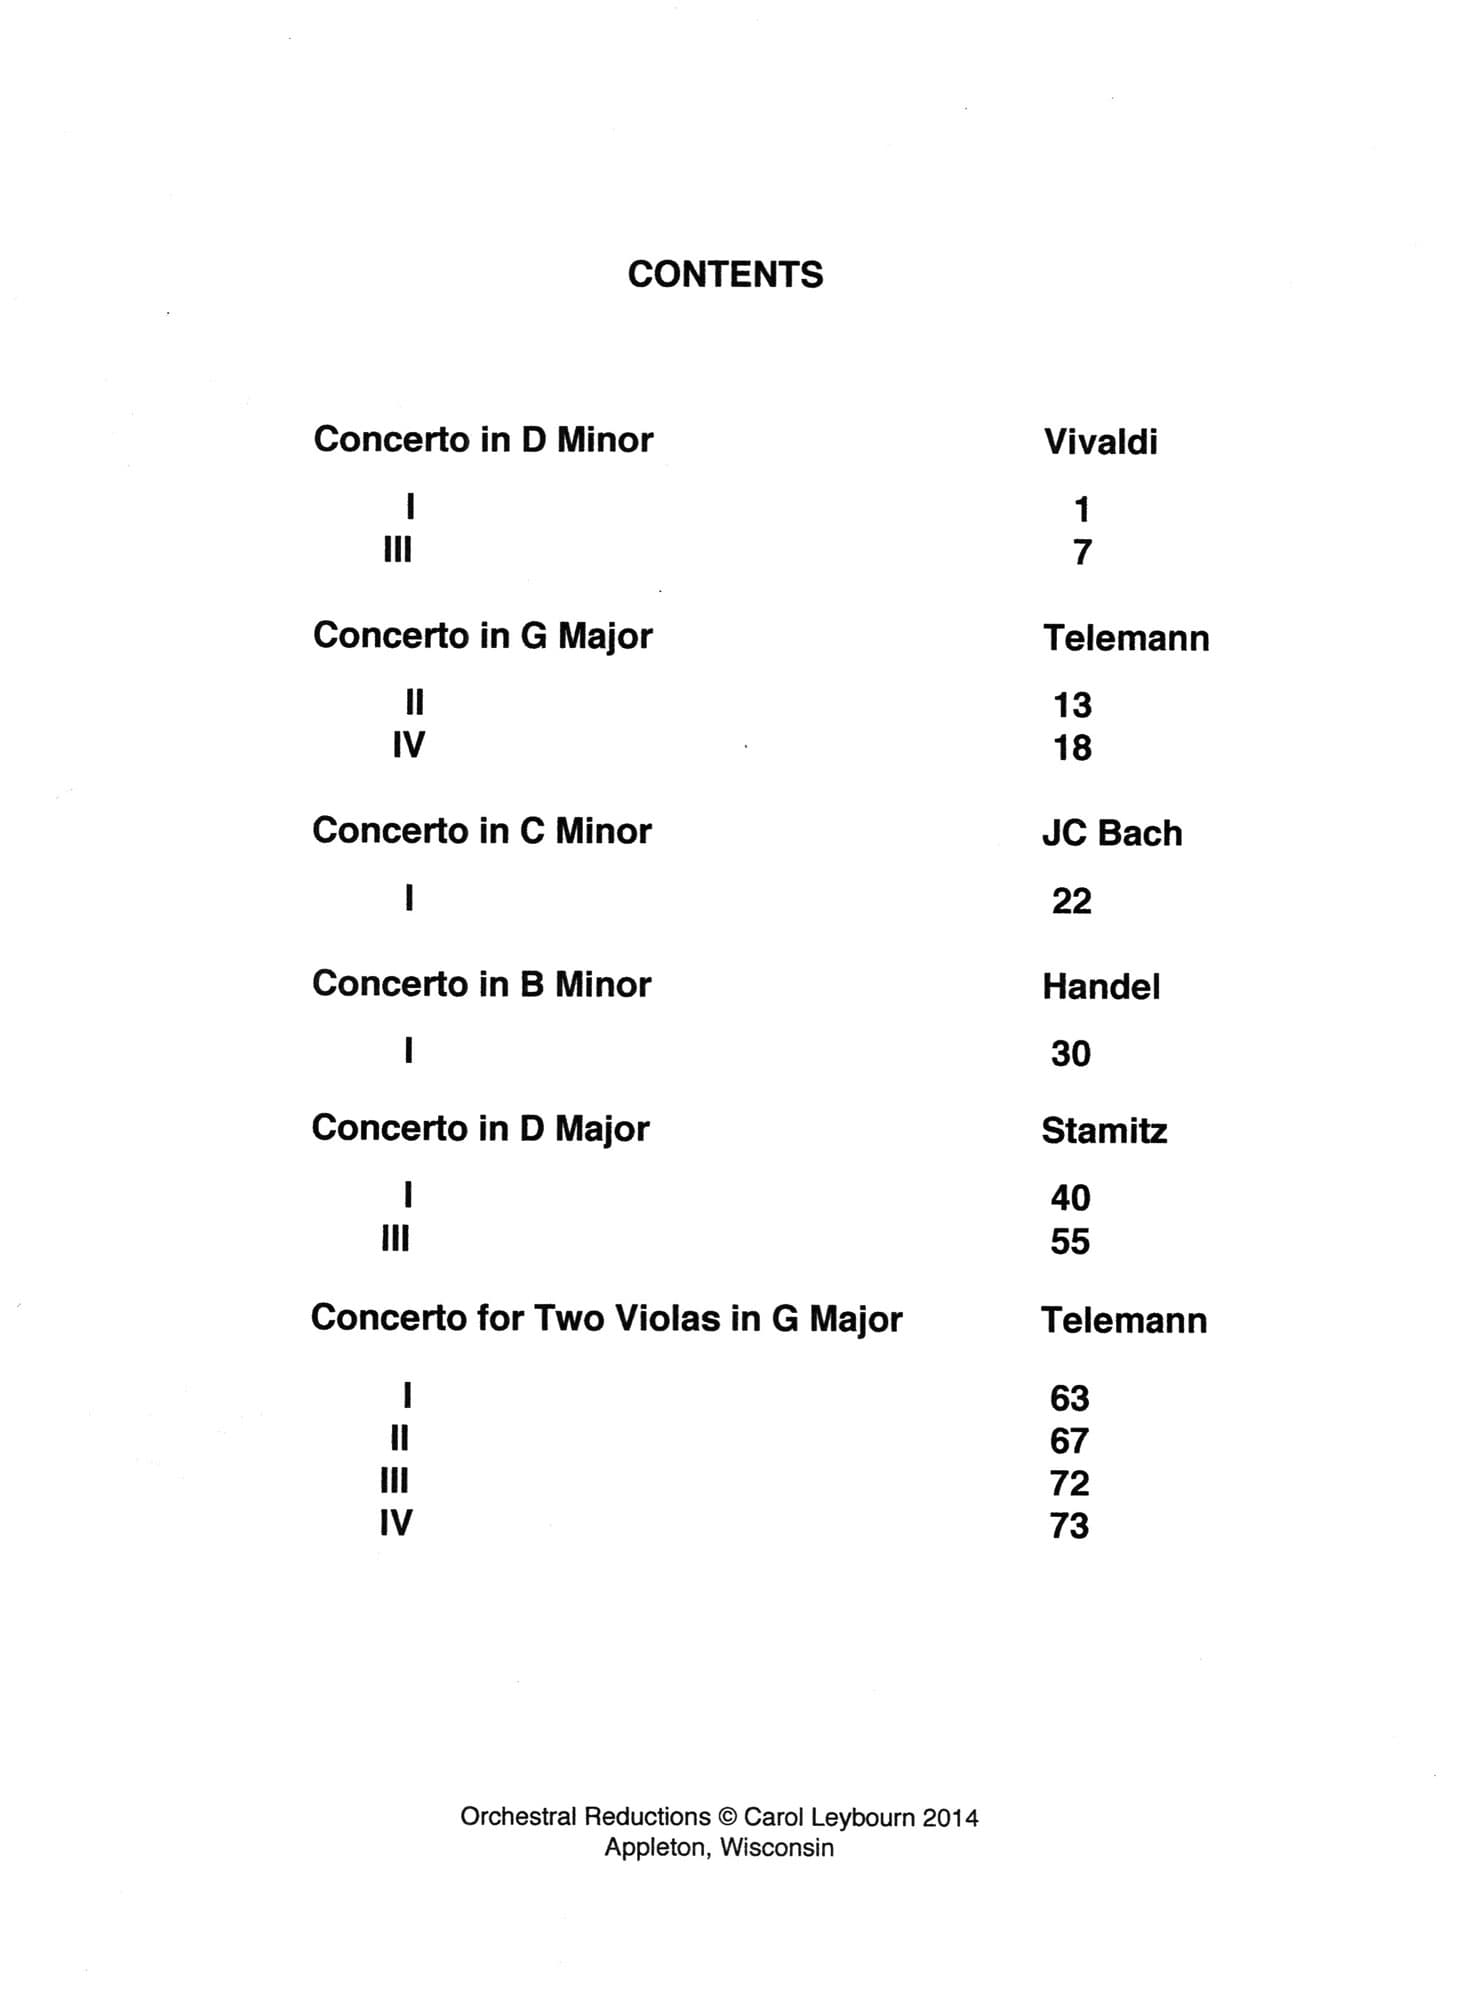 Viola Concertos (Volume 1) - Vivaldi, J.C. Bach, Telemann, Handel, Stamitz - PIANO ACCOMPANIMENT ONLY - arranged by Carol Leybourn - Frustrated Accompanist Edition